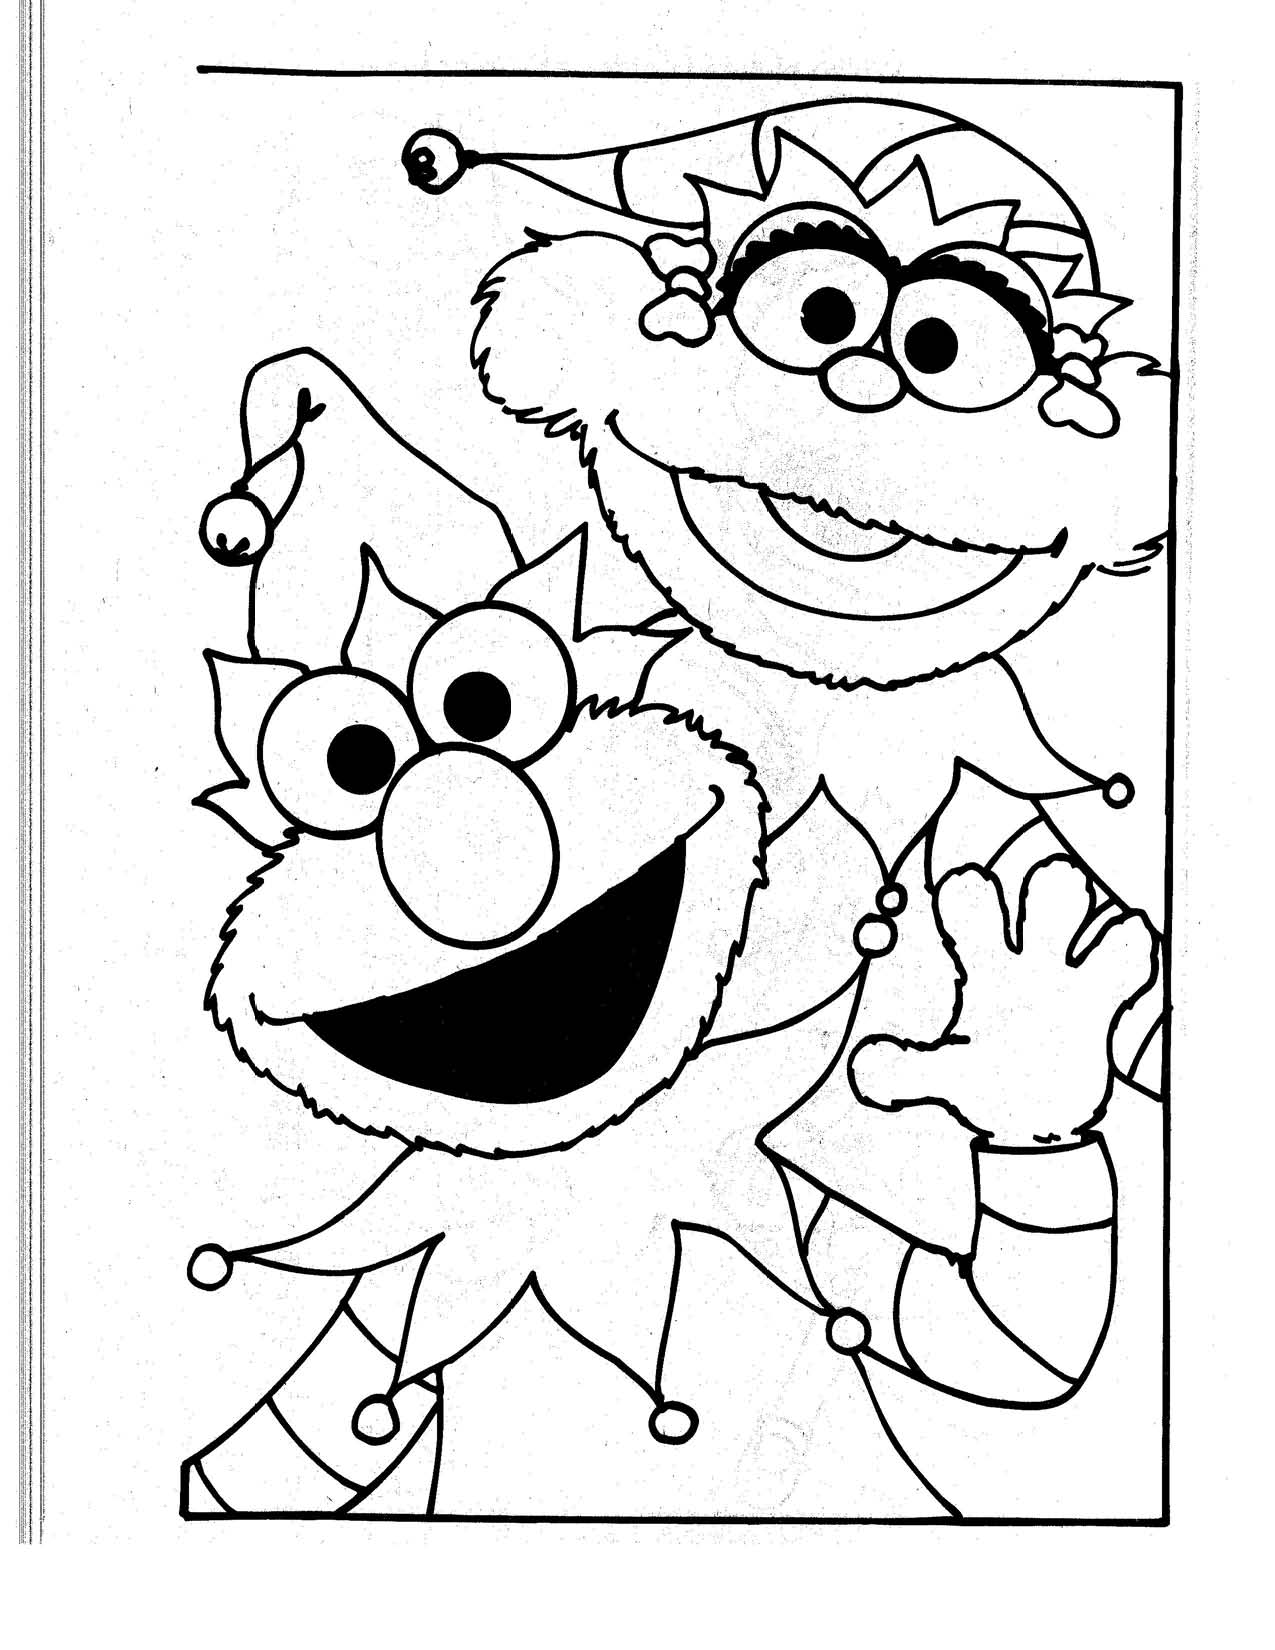 Elmo coloring books for kids ages 2-4: Preschool, boys, girls